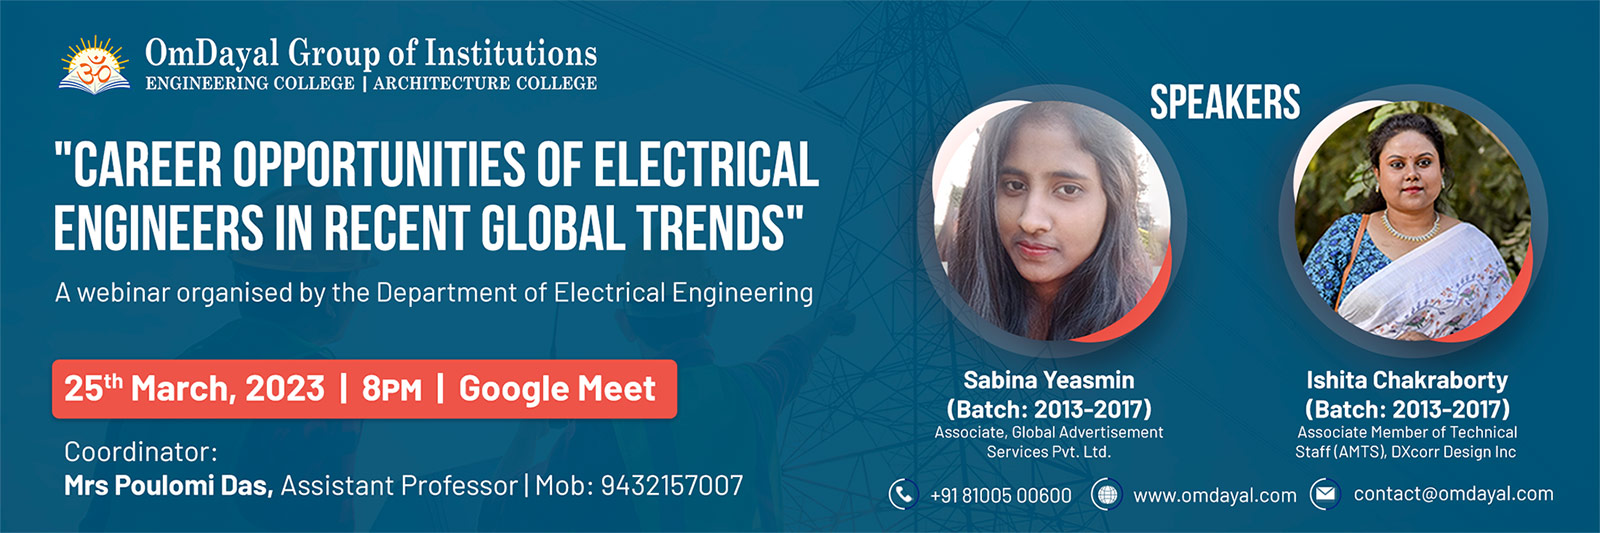 Webinar on “Career Opportunities of Electrical Engineers in Recent Global Trends”